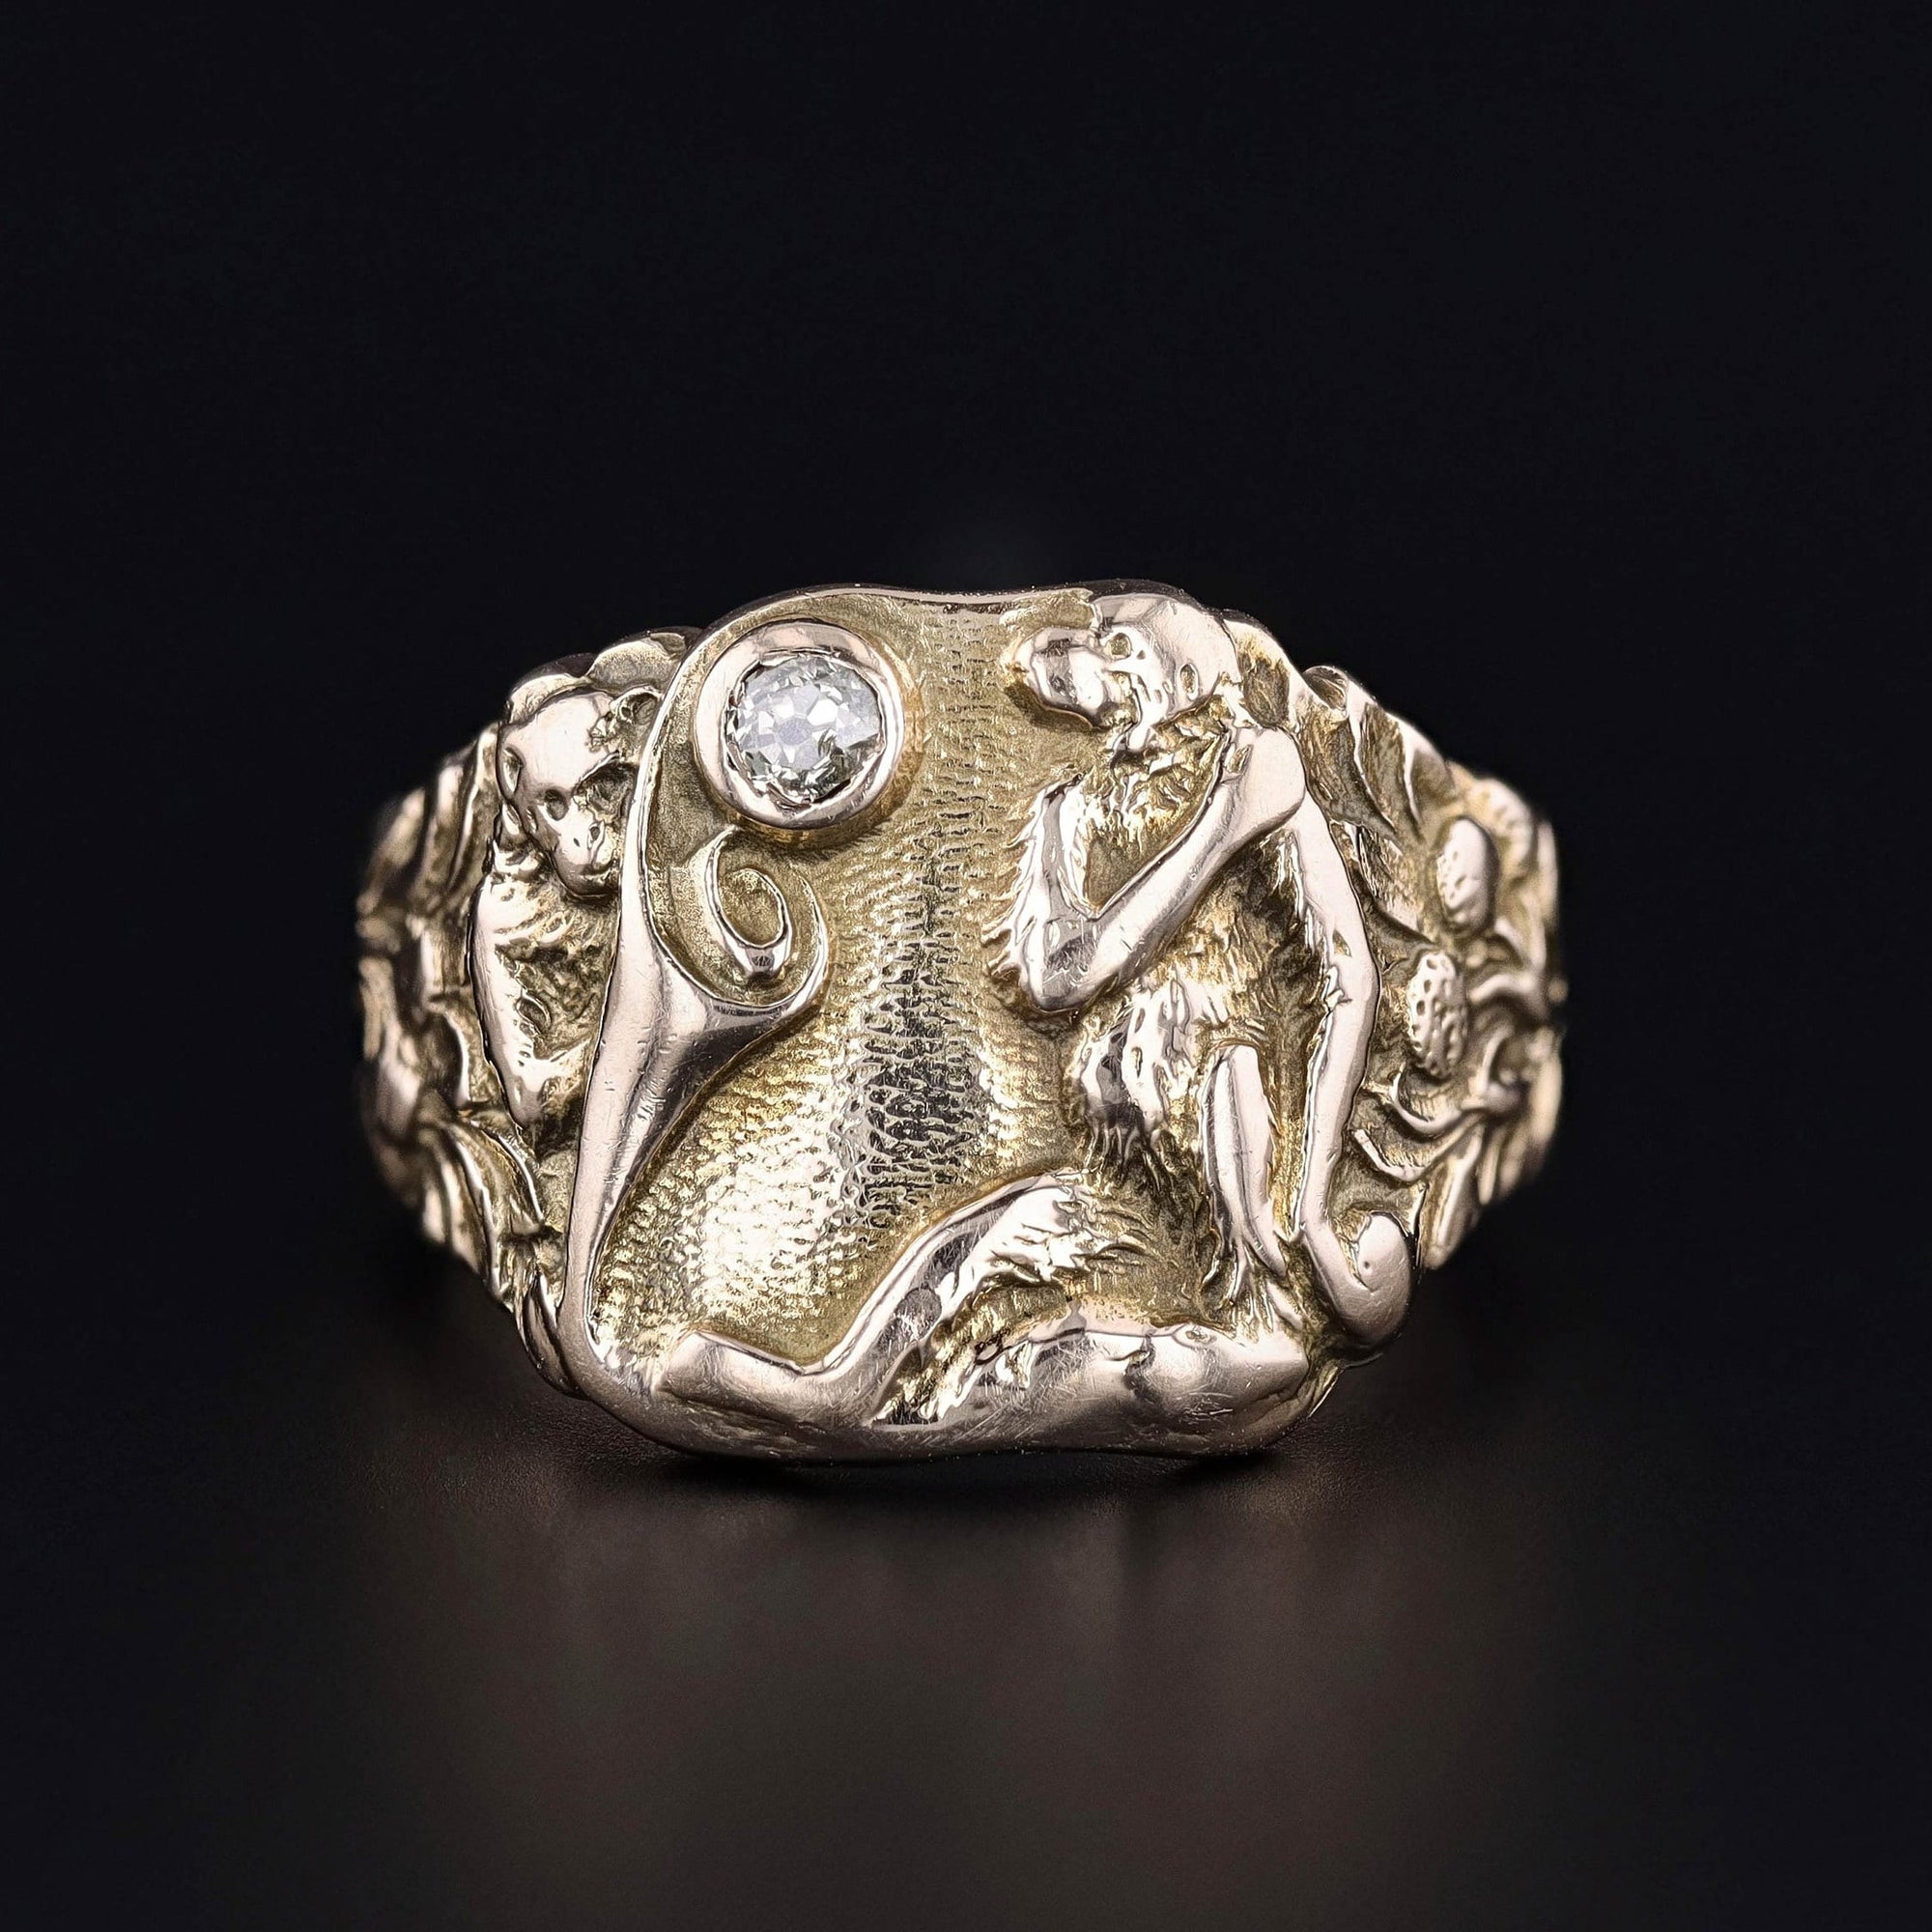 Antique Monkey Signet Ring of 14k Gold